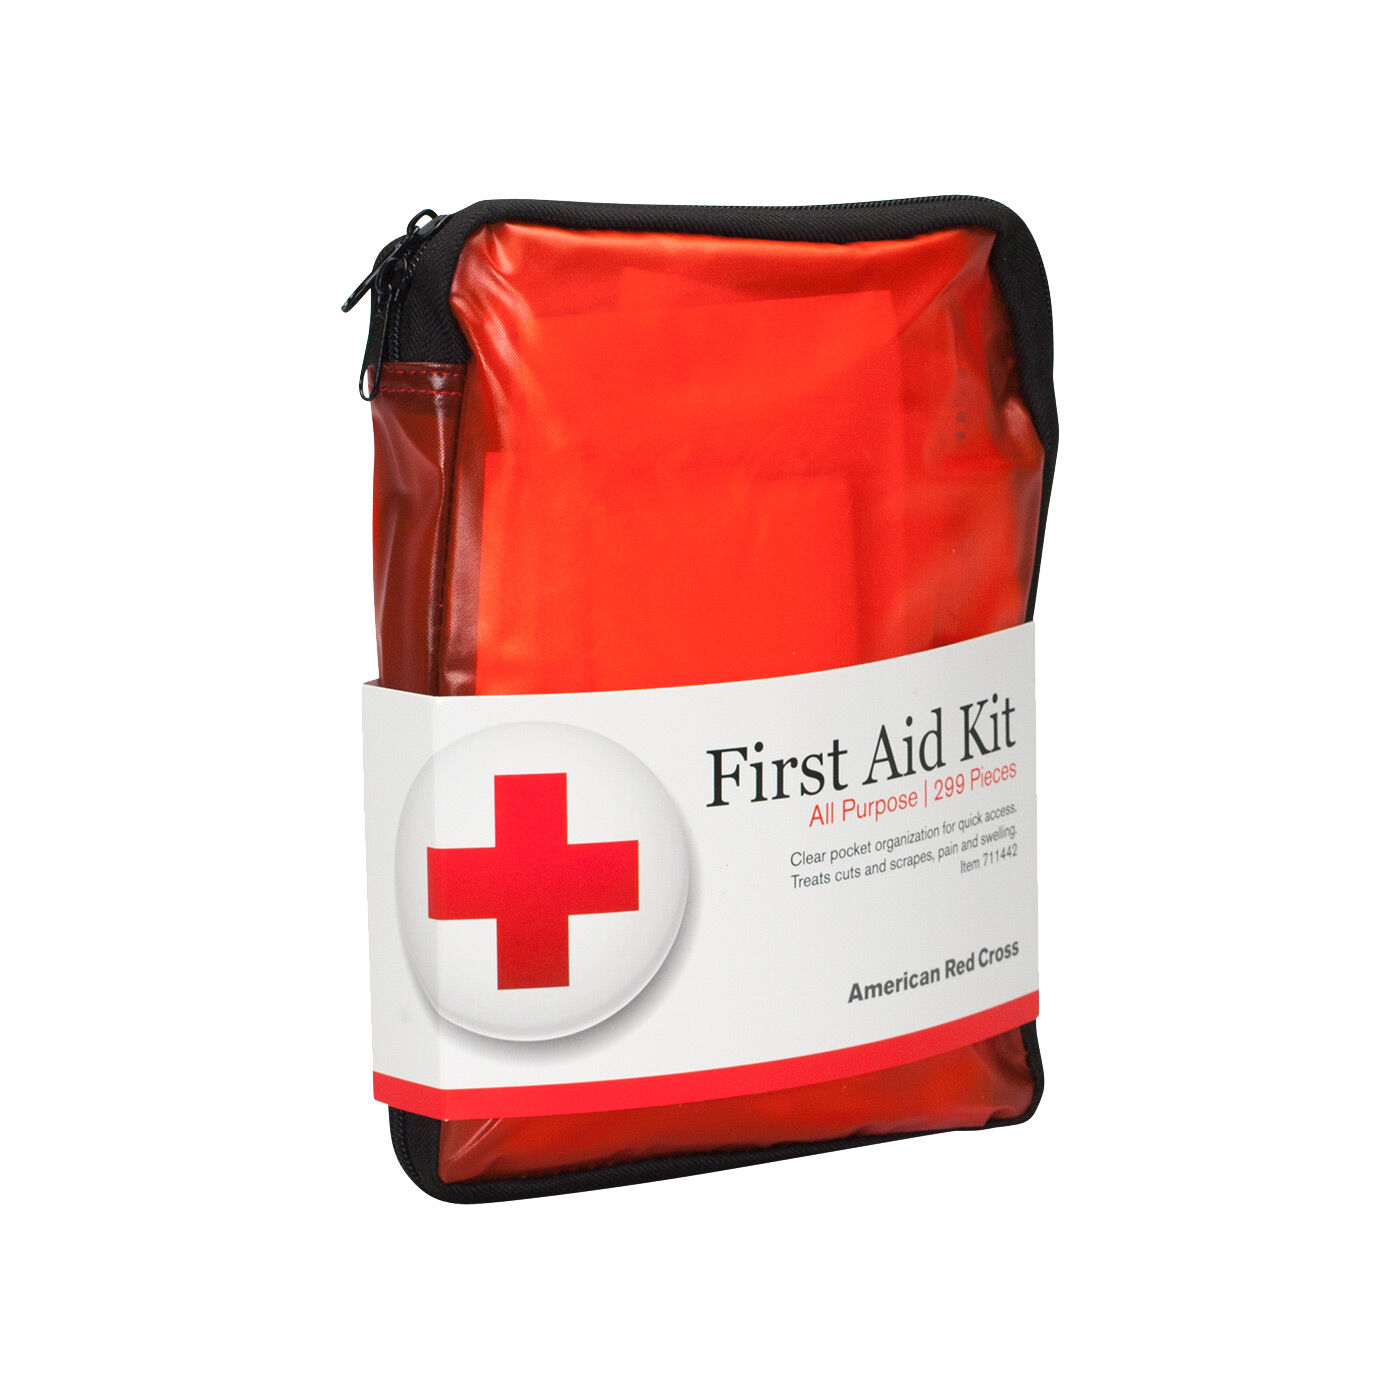 1st aid kit